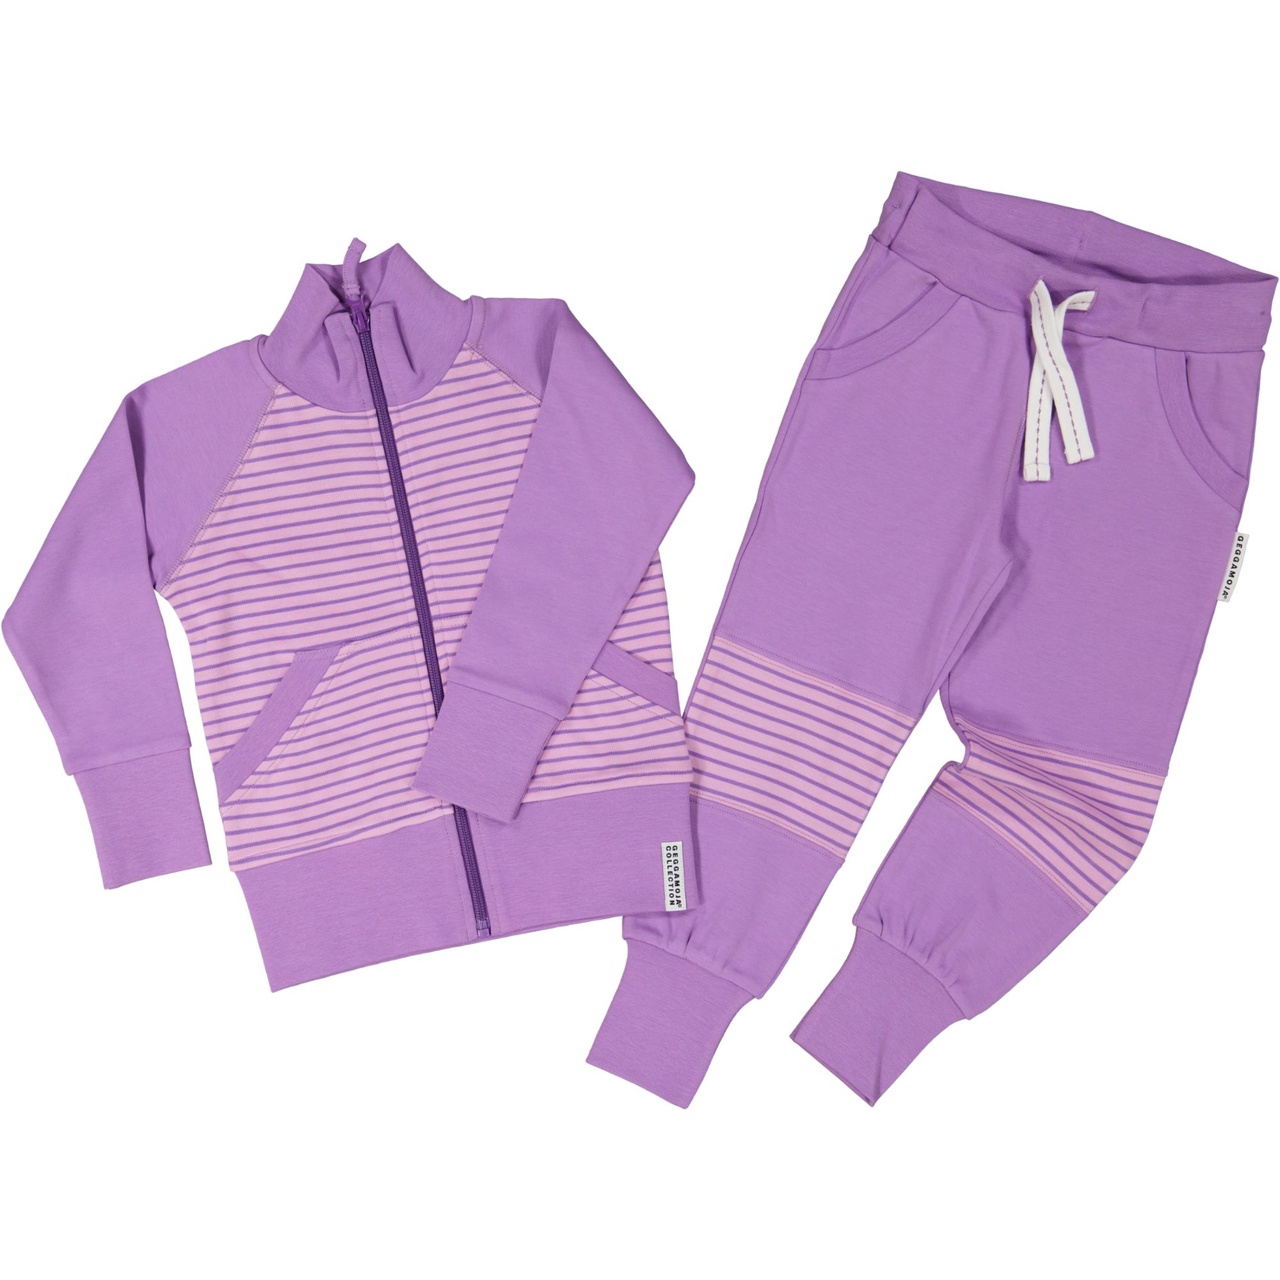 Long pants L.purple/purple 16